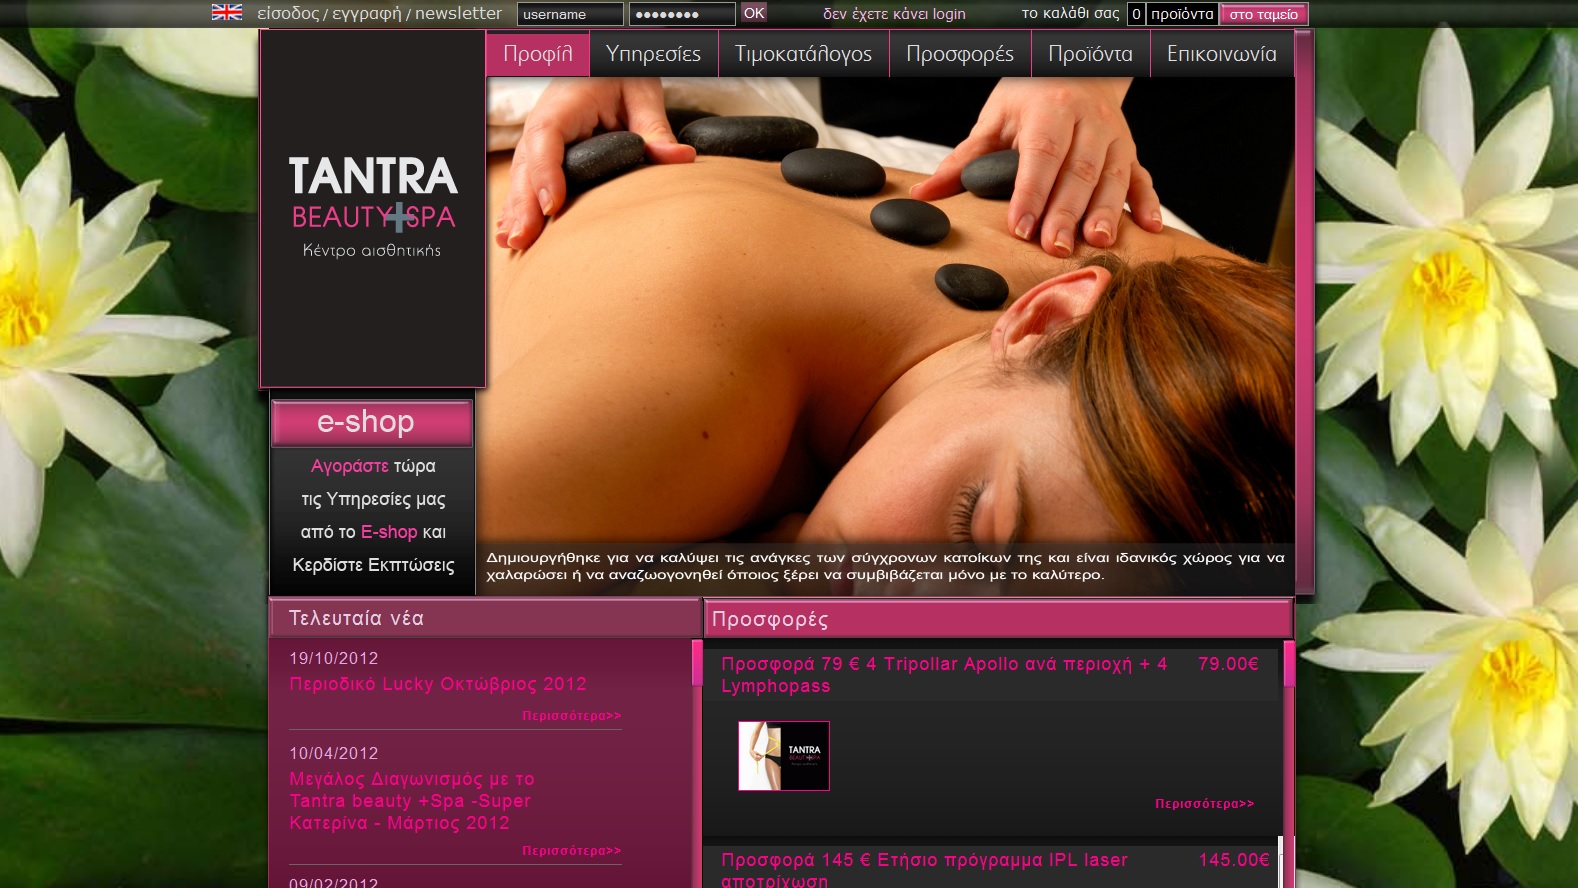 Tantra spa. Ιστιντούτο χαλάρωσης και e-shop καλυντικών